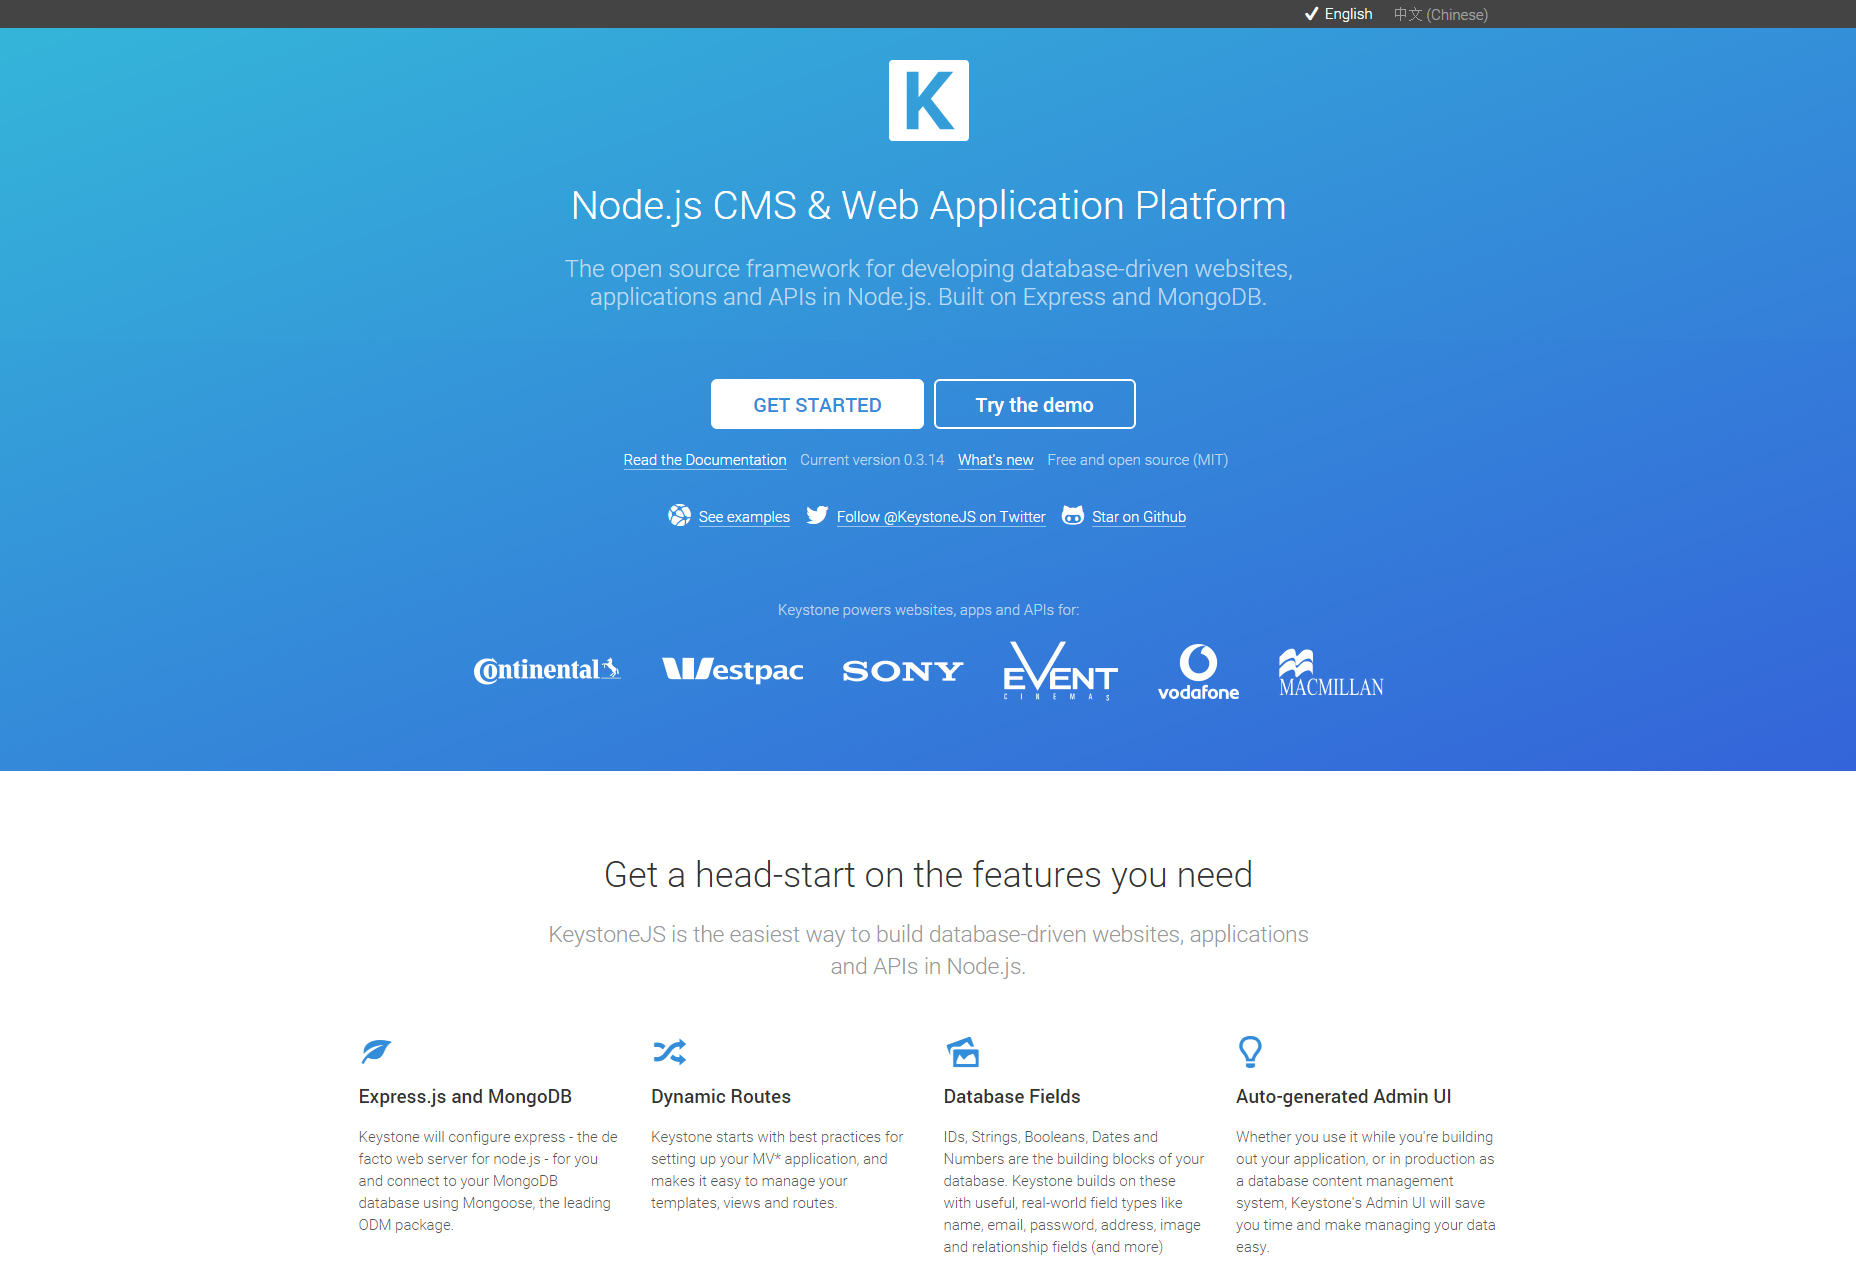 keystonejs-nodejs-cms-and-web-application-platform